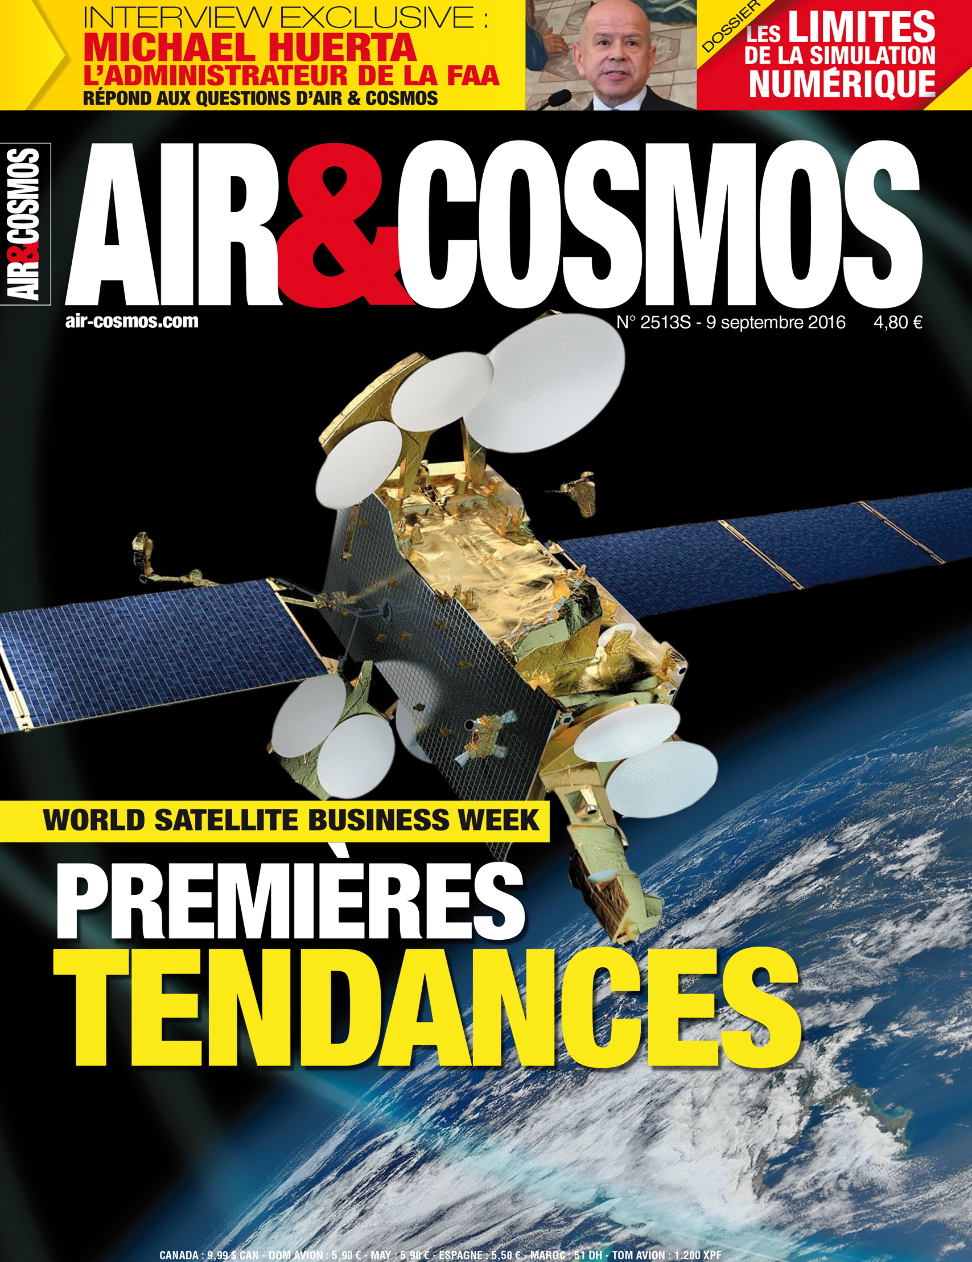 World Satellite Business Week : premières tendances